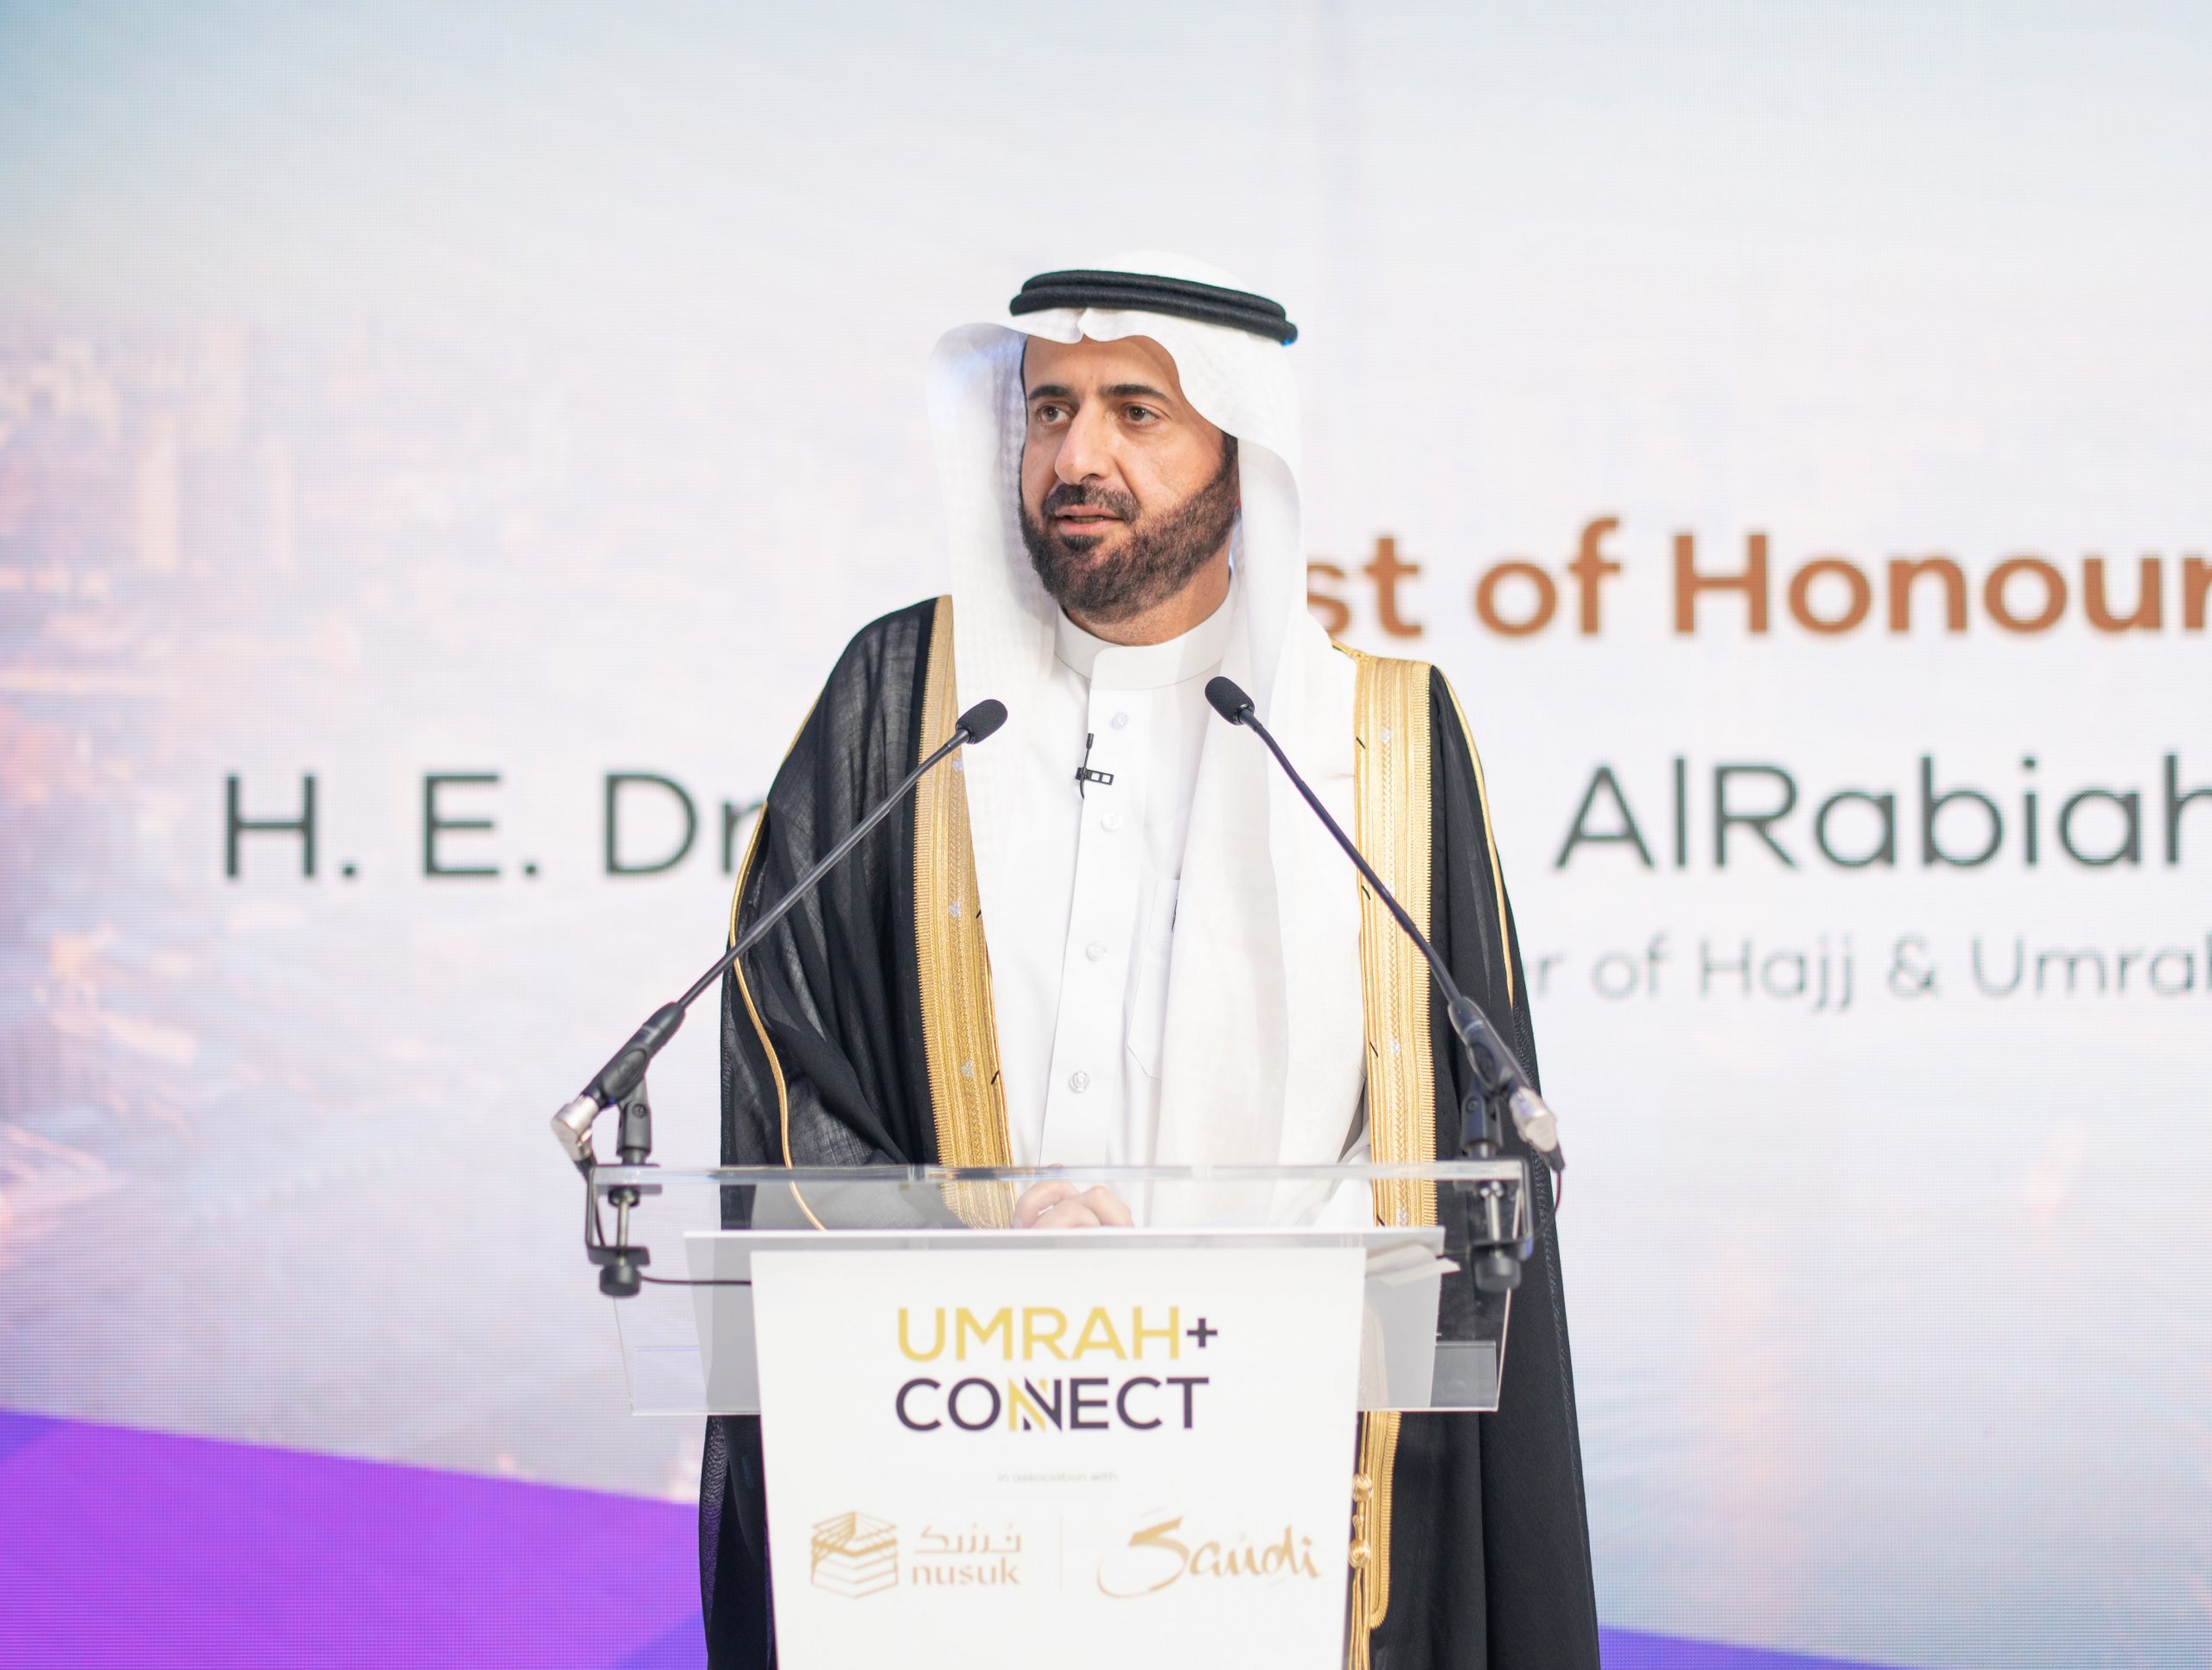 Saudi Arabia’s Minister of Hajj and Umrah Dr. Tawfiq Al-Rabiah speaks at the Umrah+ Connect event on Sunday. Image: Umrah+ Connect